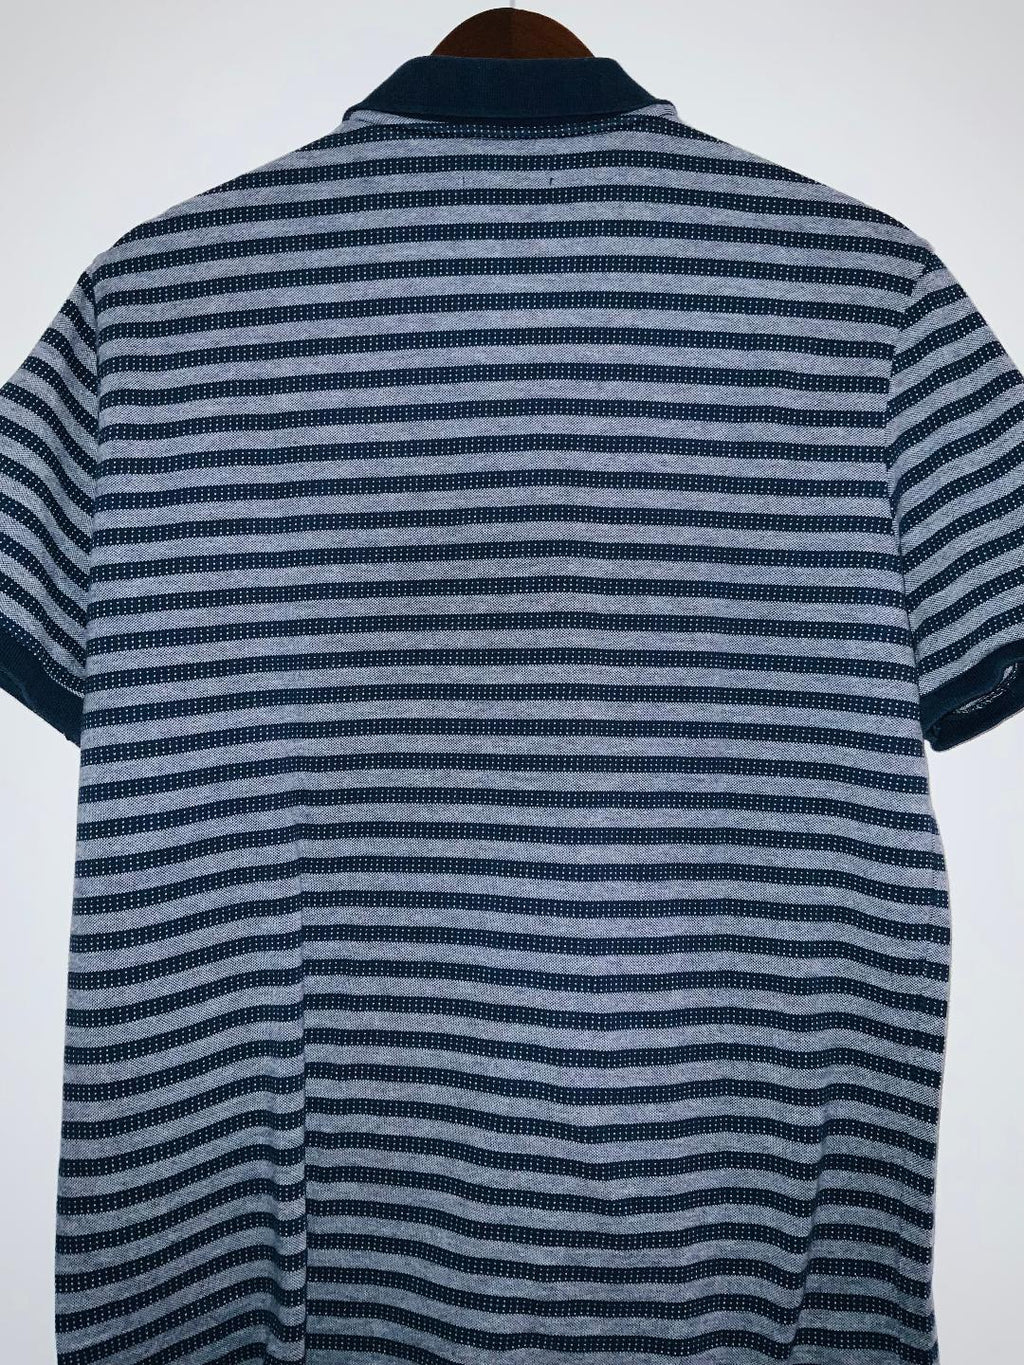 PAT PRIMO Camiseta Tipo Polo Preteñida. Talla XL